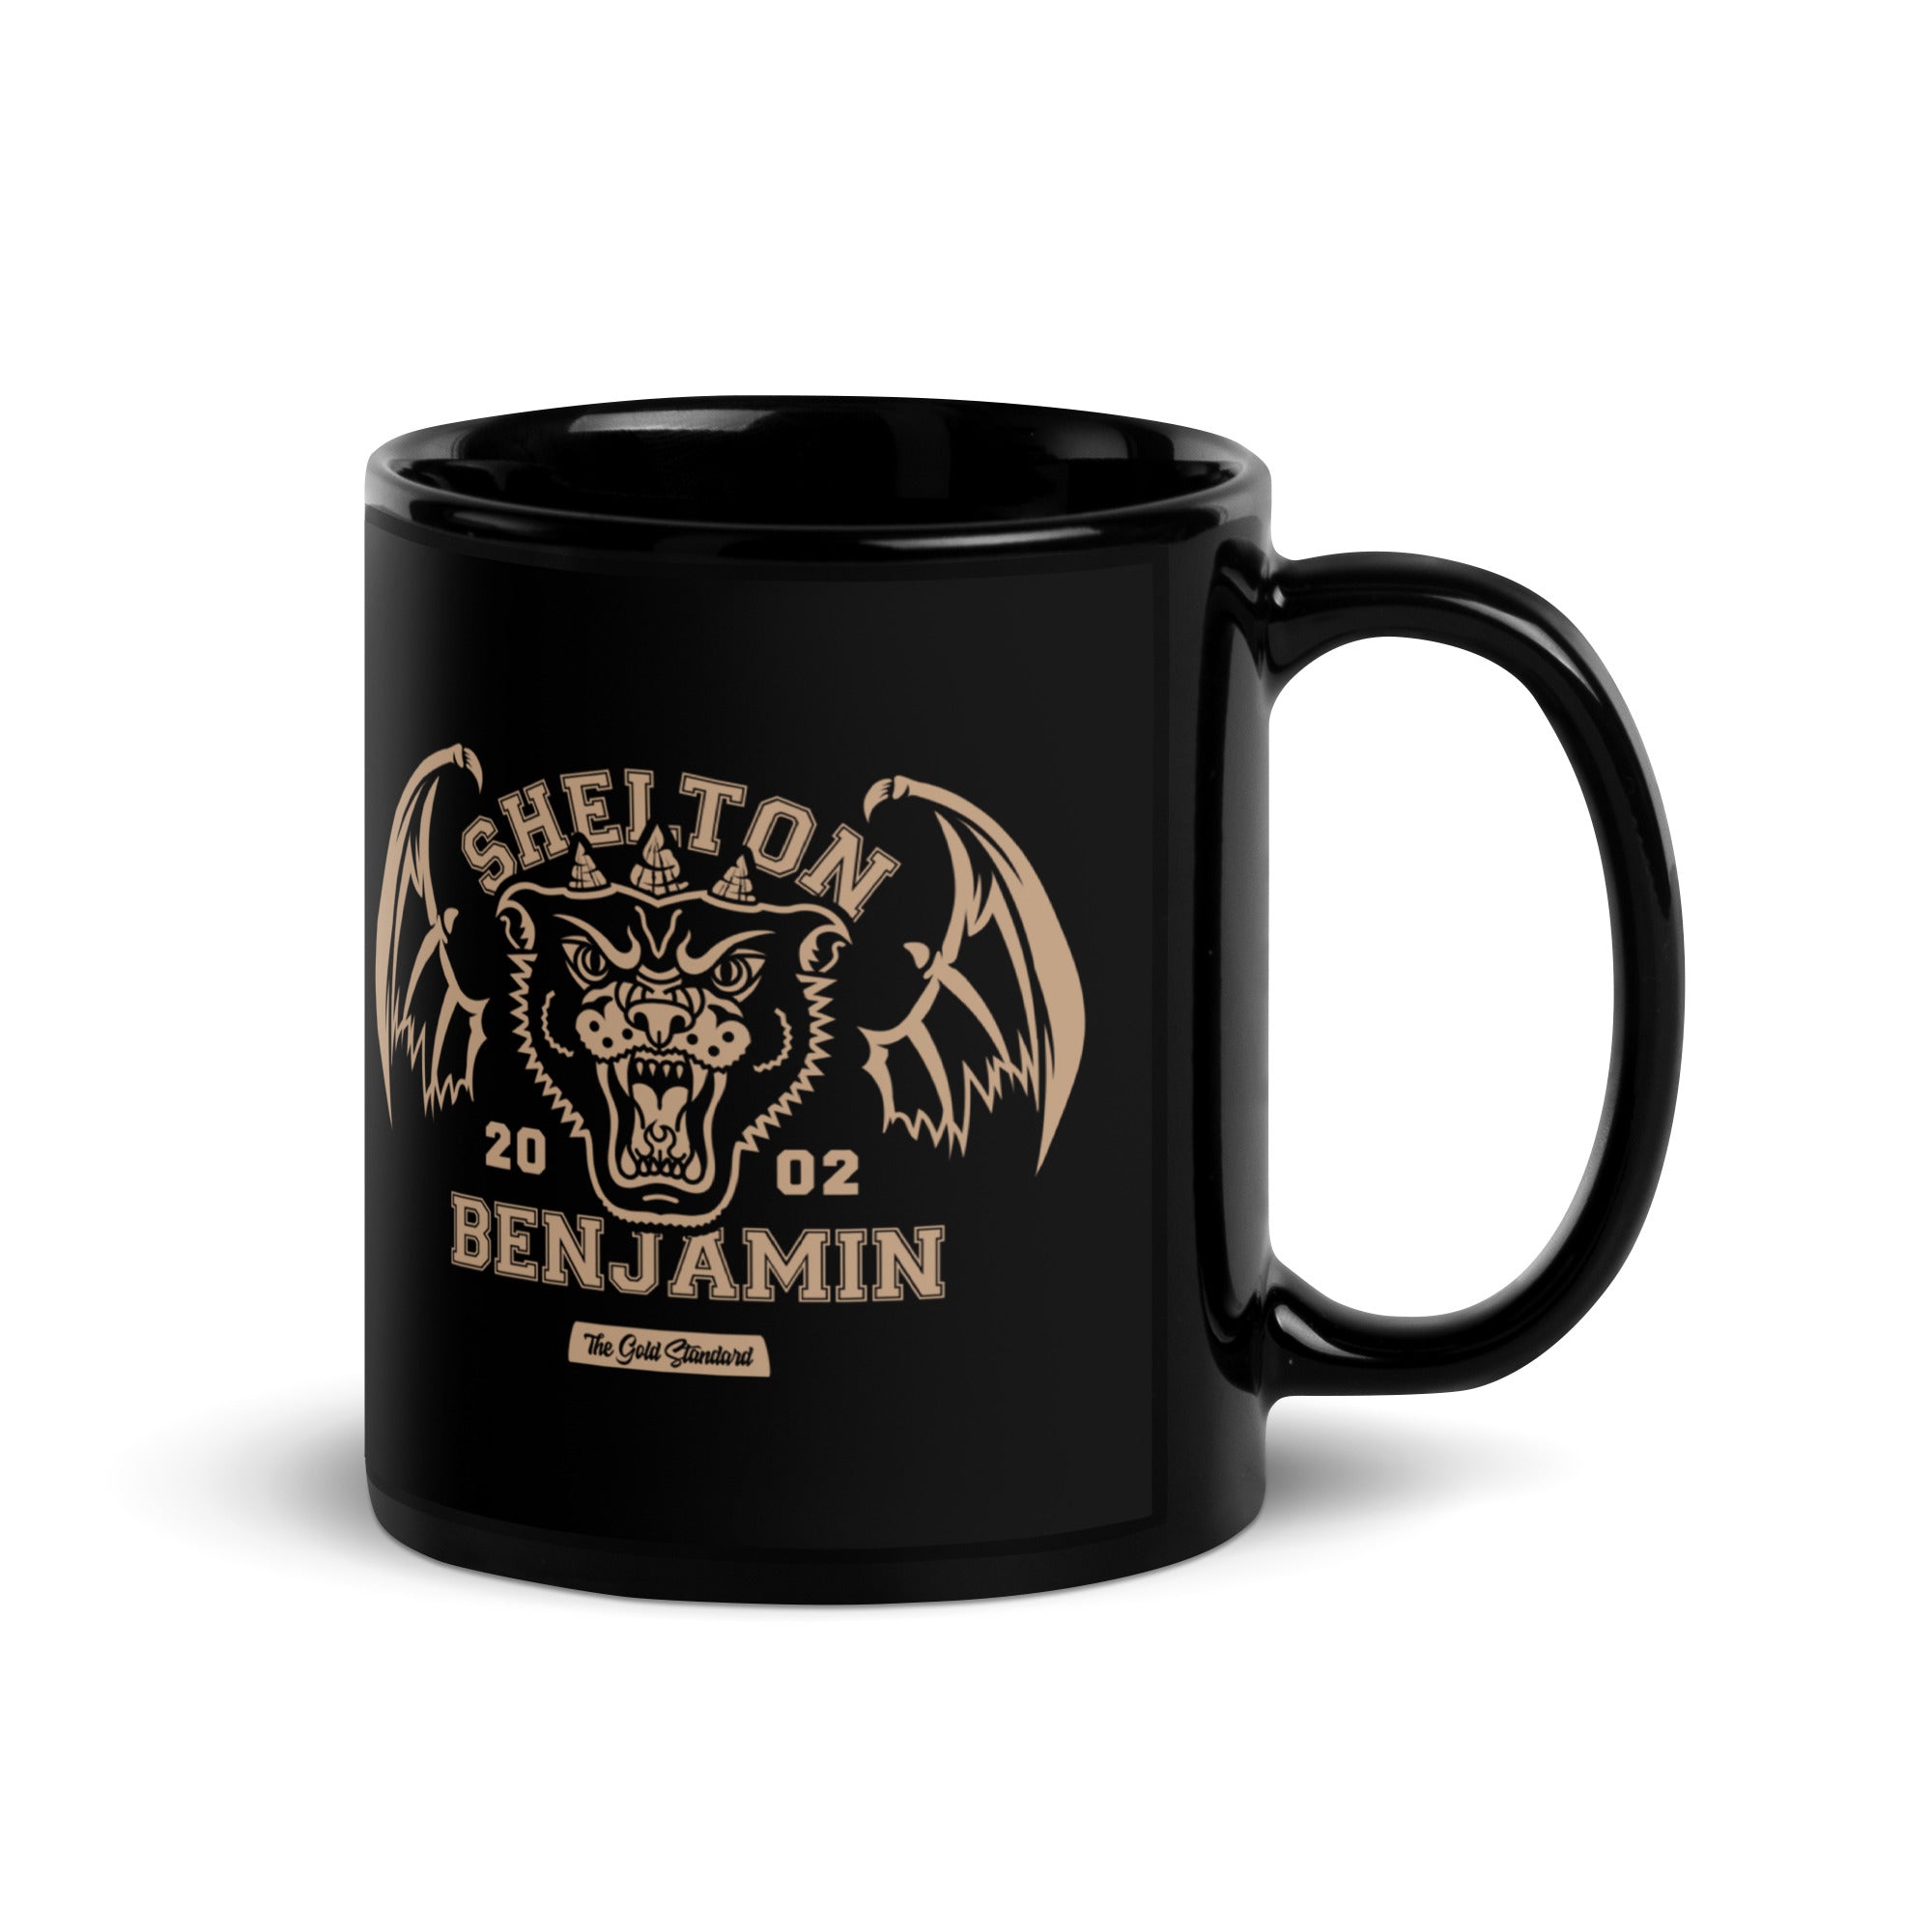 Shelton Benjamin "Gold Standard Est 2002" Black Glossy Mug